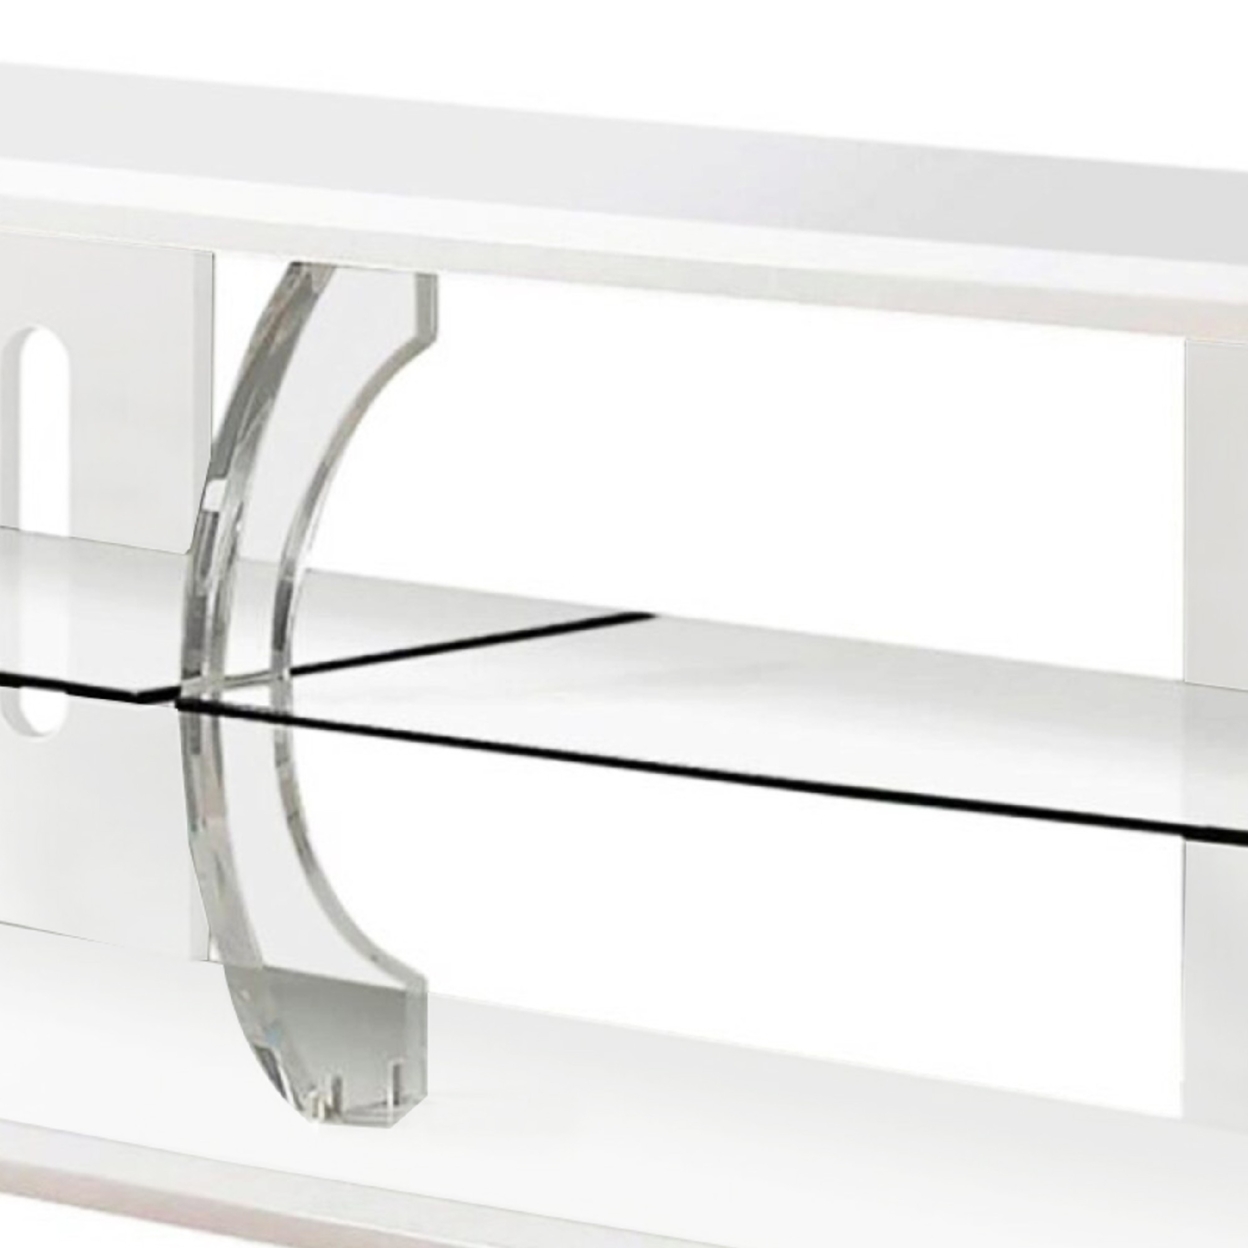 72 Wooden TV Stand With Spacious Glass Shelf, White And White- Saltoro Sherpi